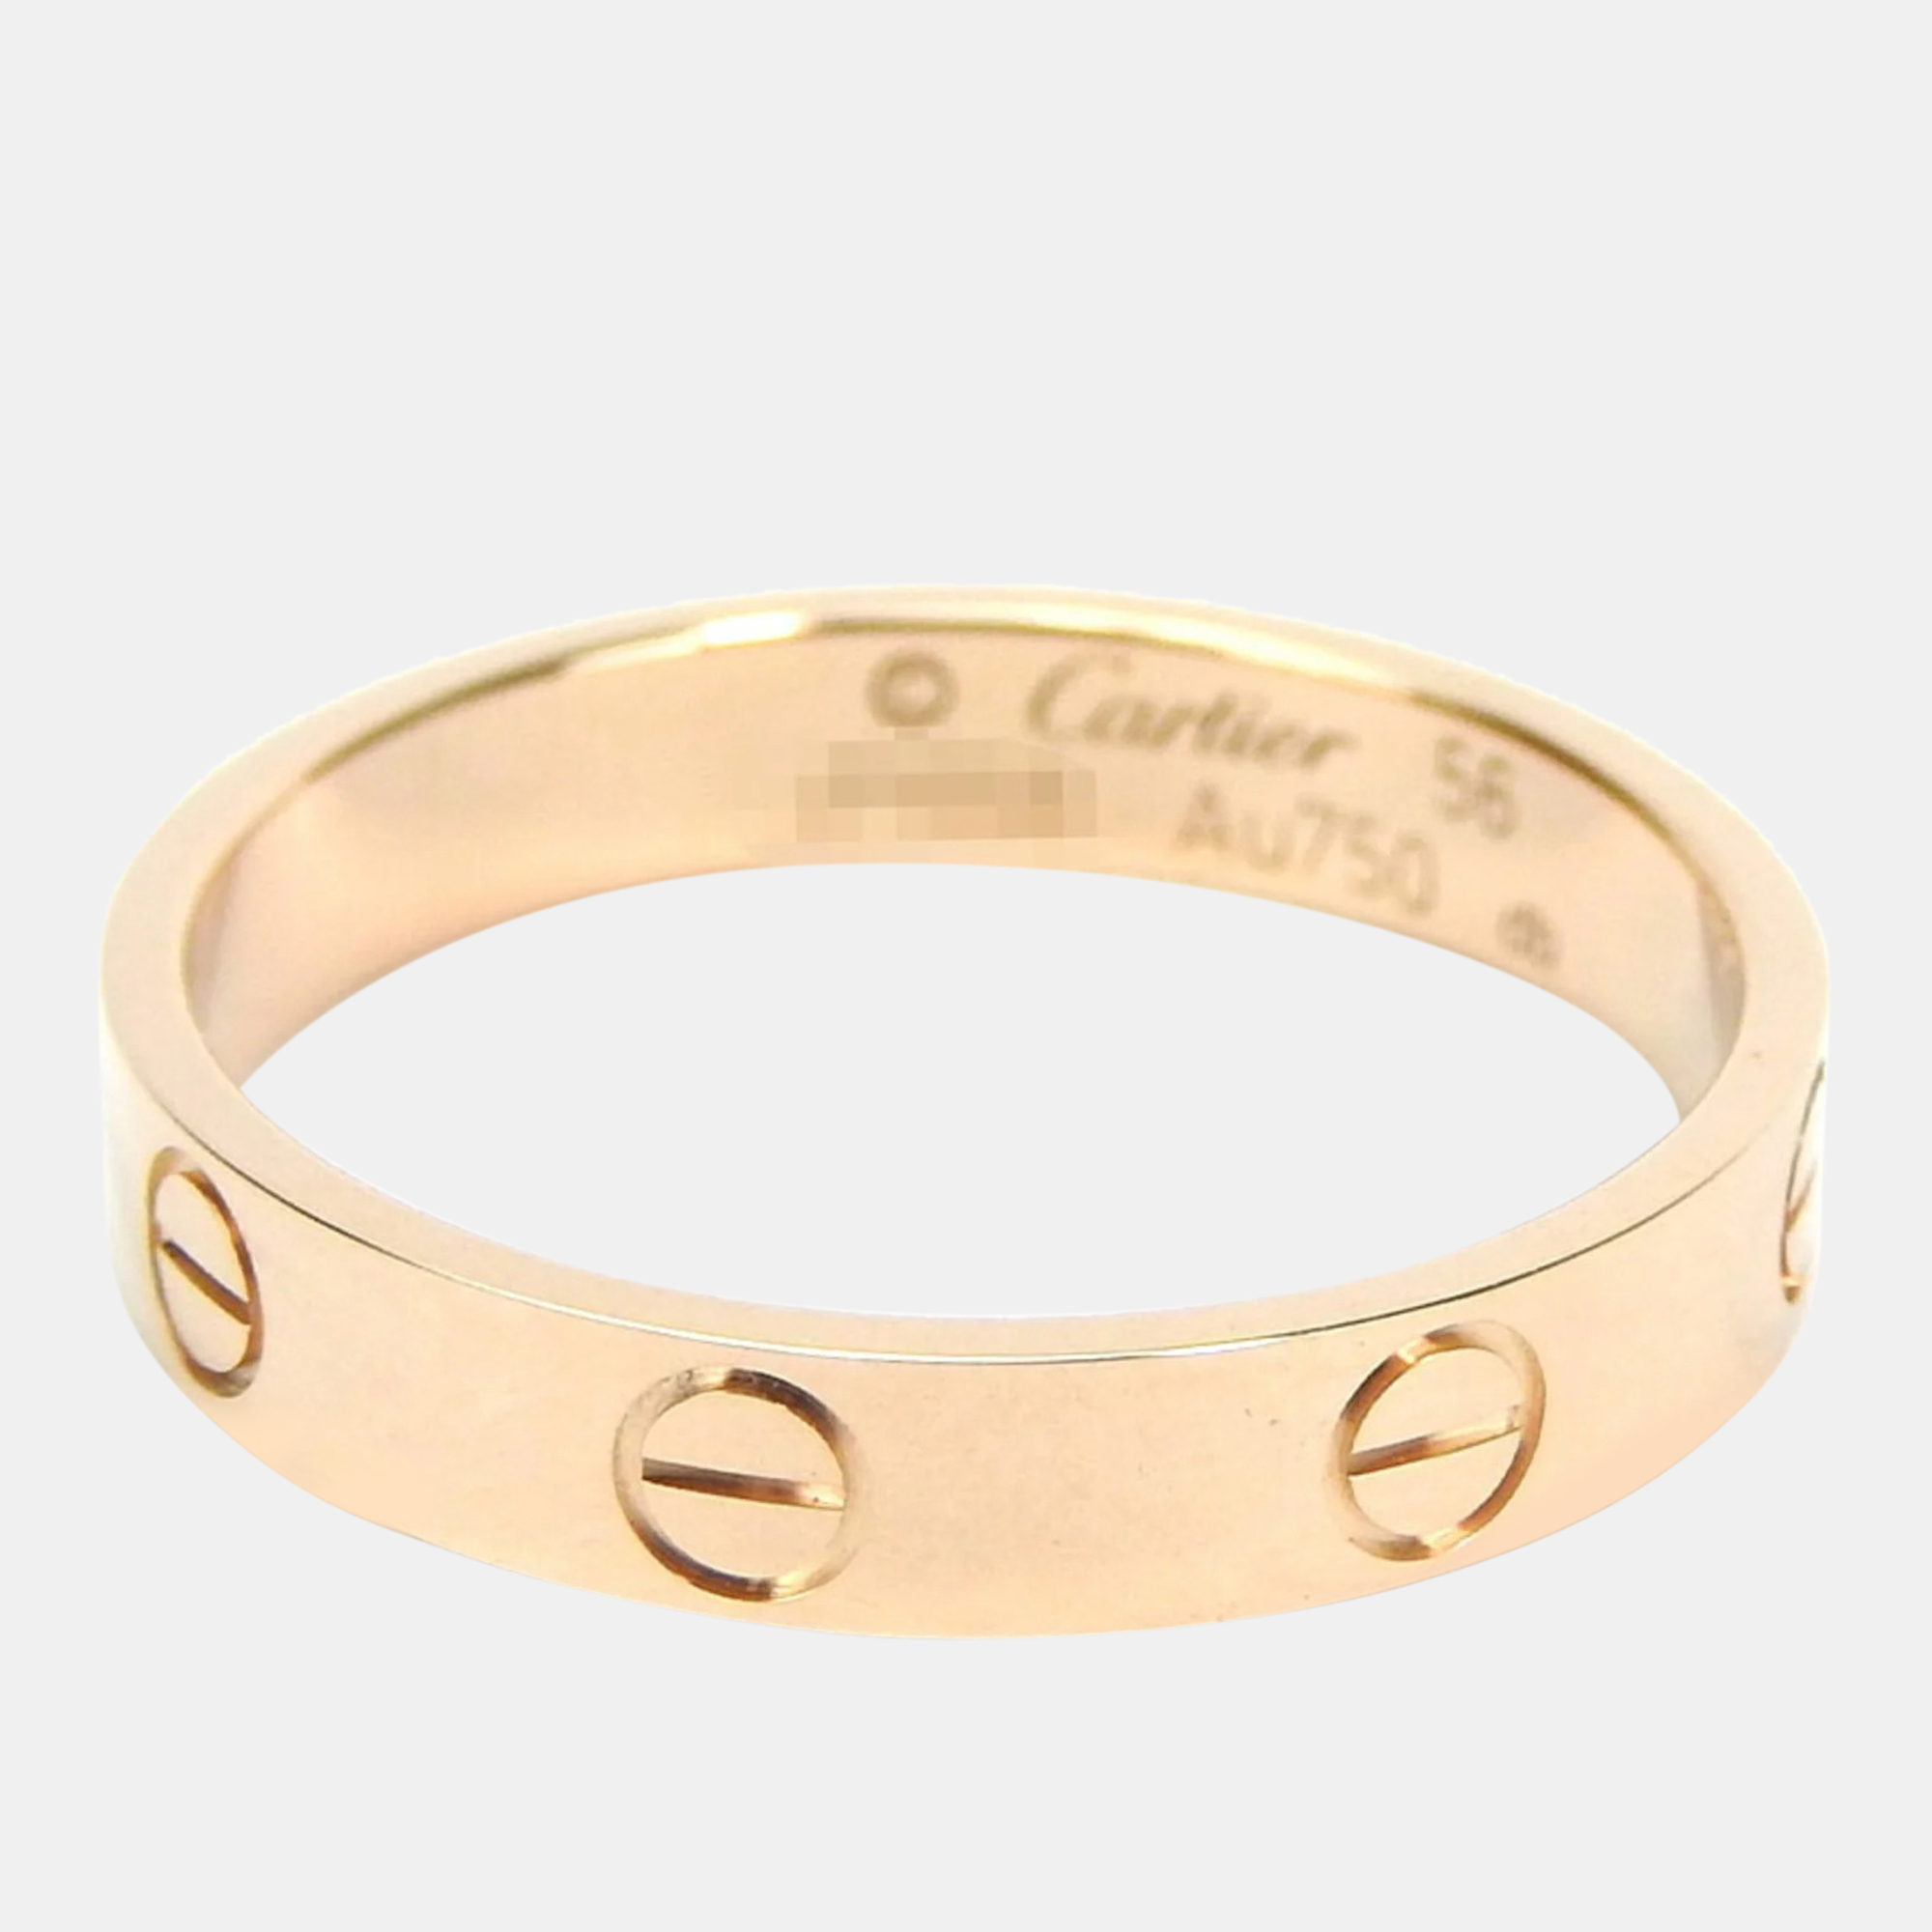 Cartier 18K Rose Gold Love Band Ring EU 56